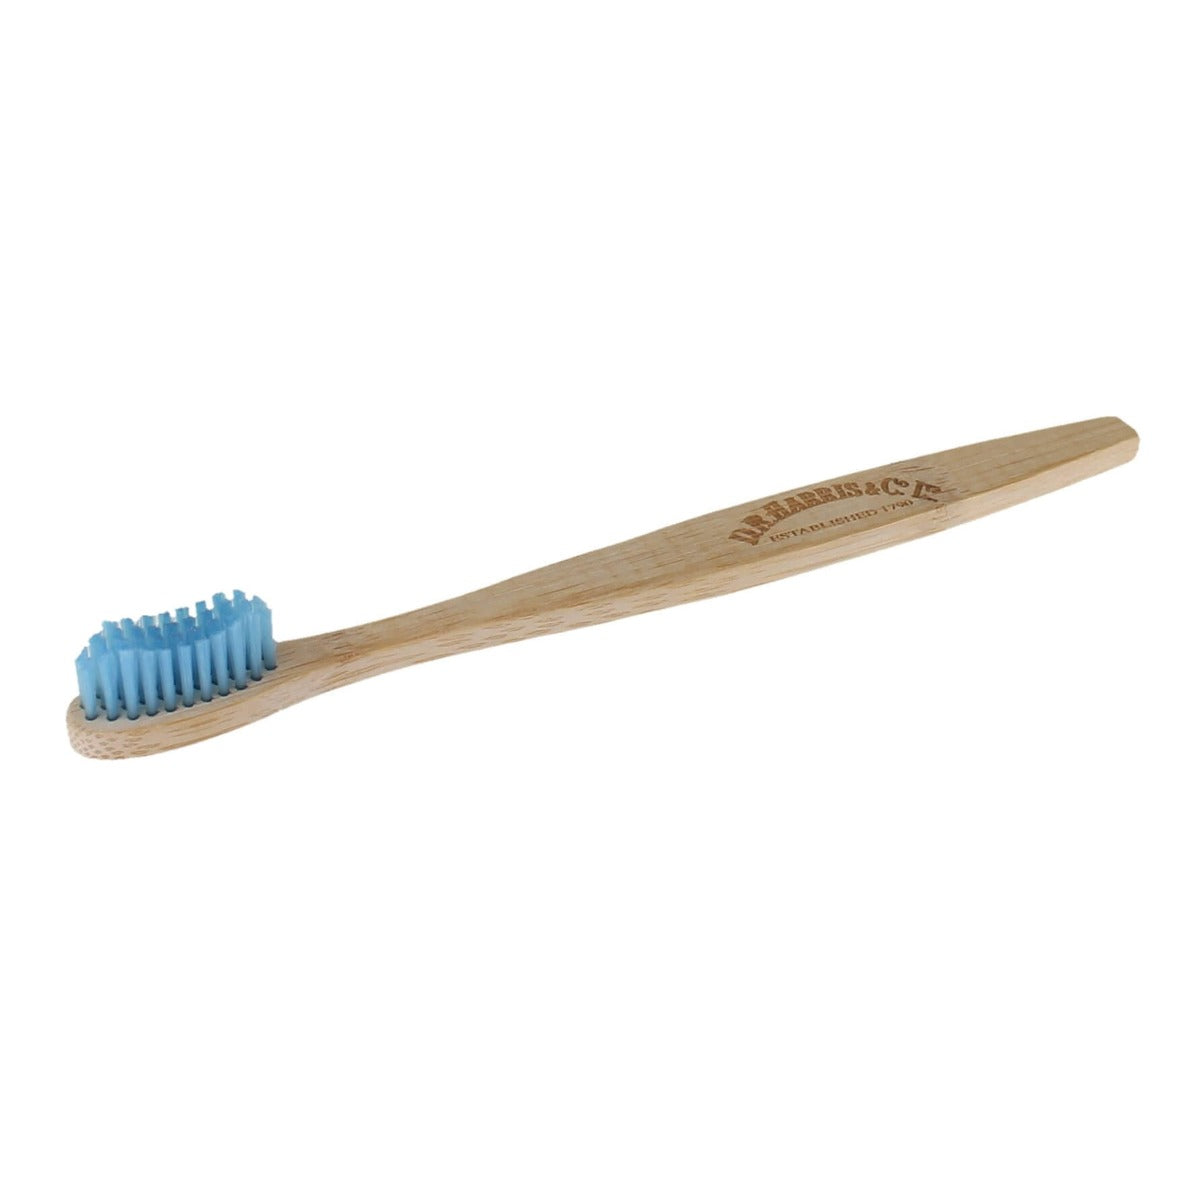 D R Harris Biodegradable Bamboo Toothbrush - Blue Bristles